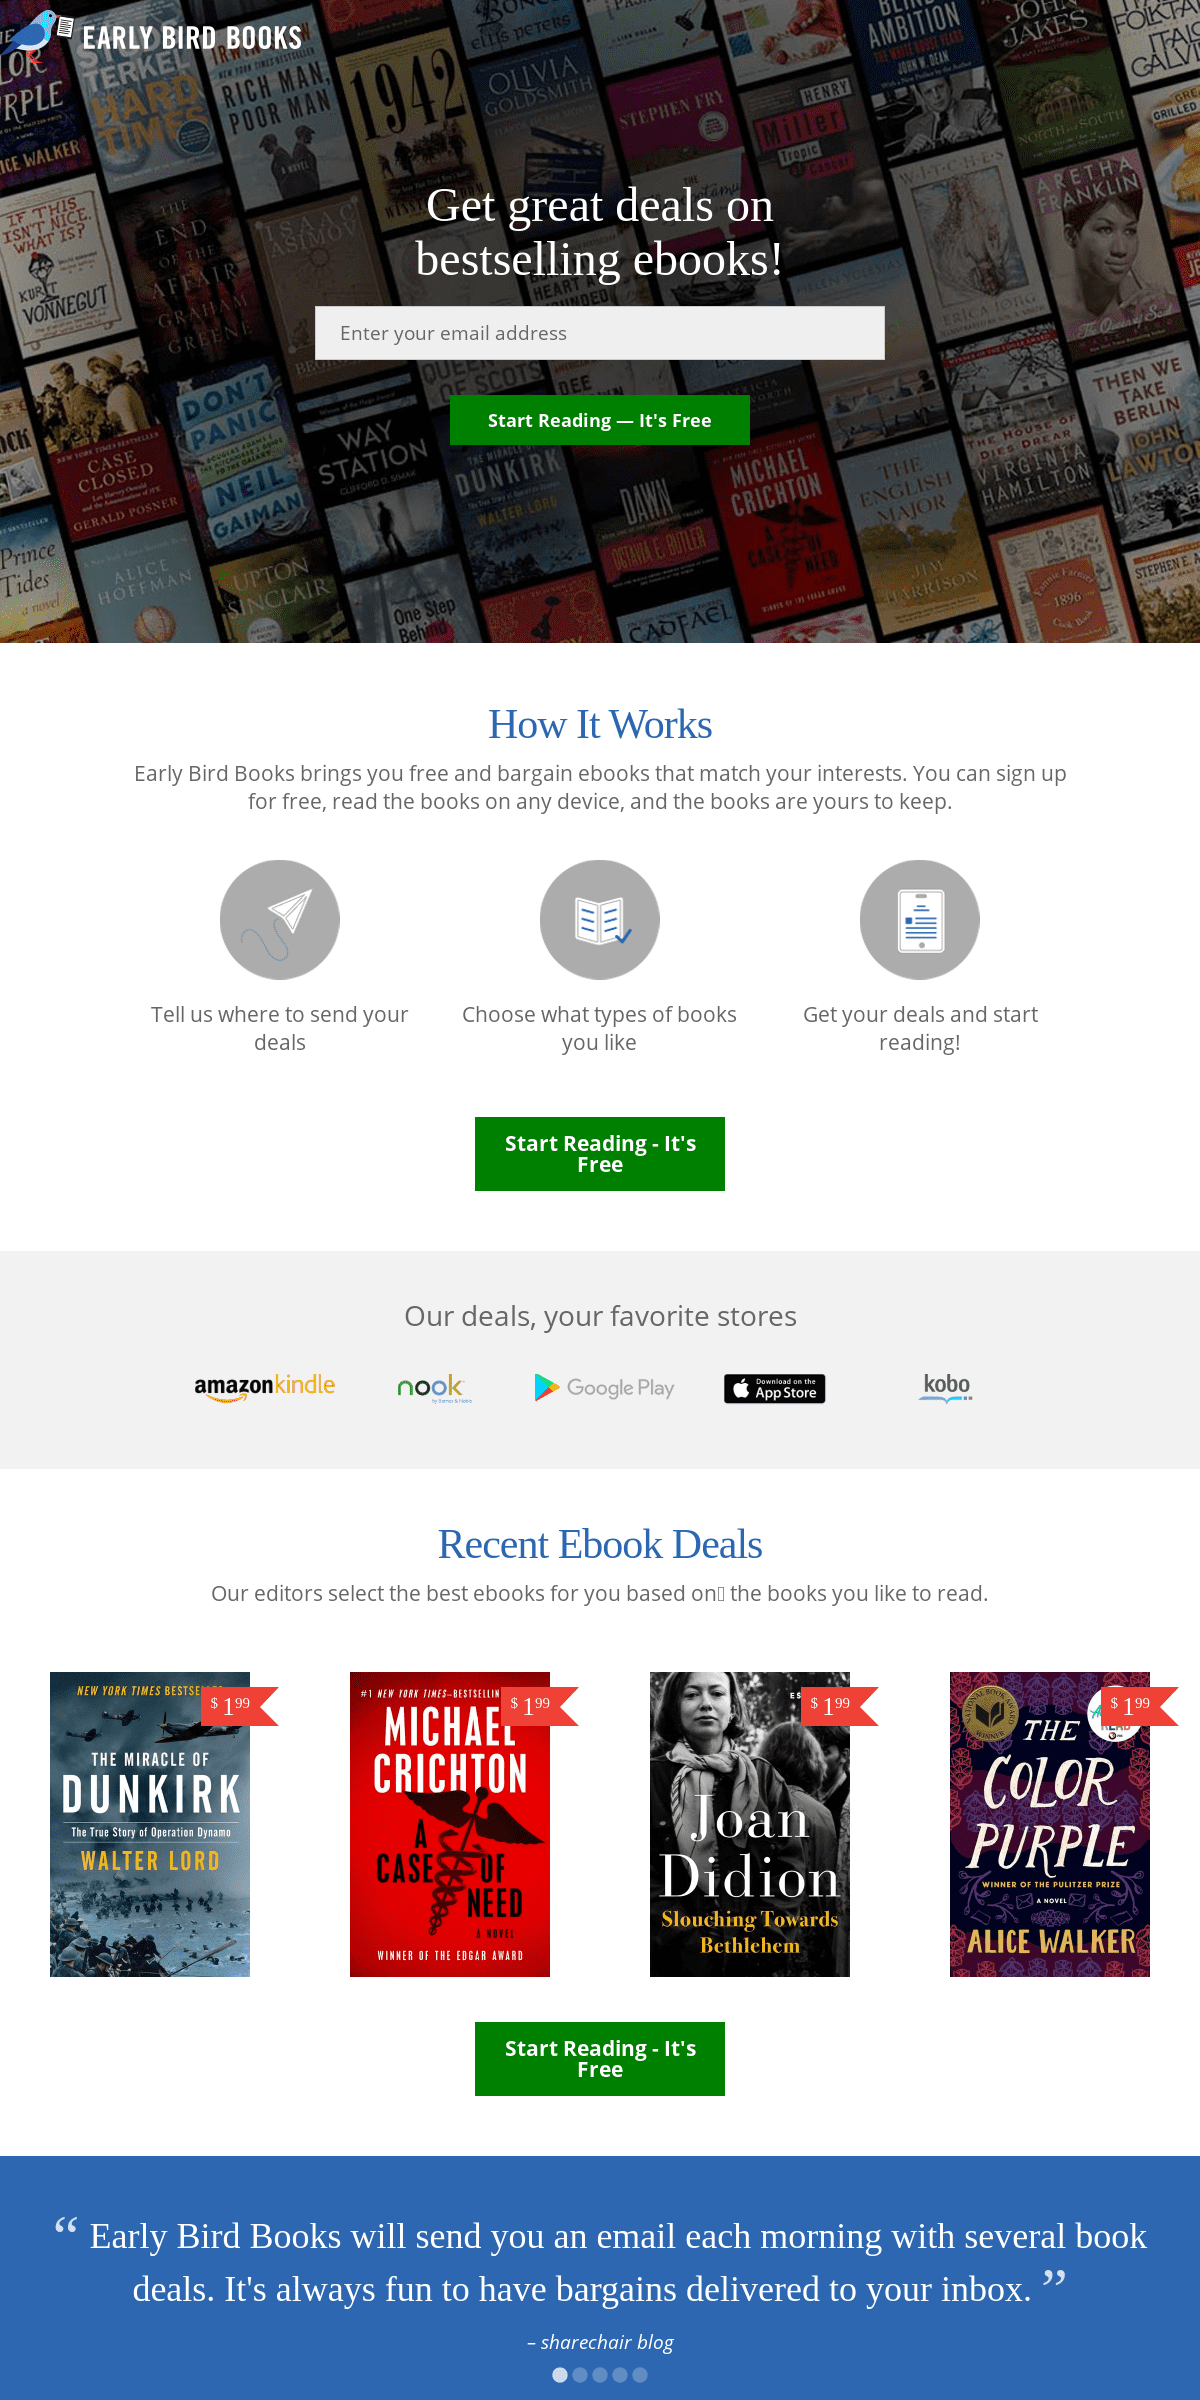 A complete backup of earlybirdbooks.com